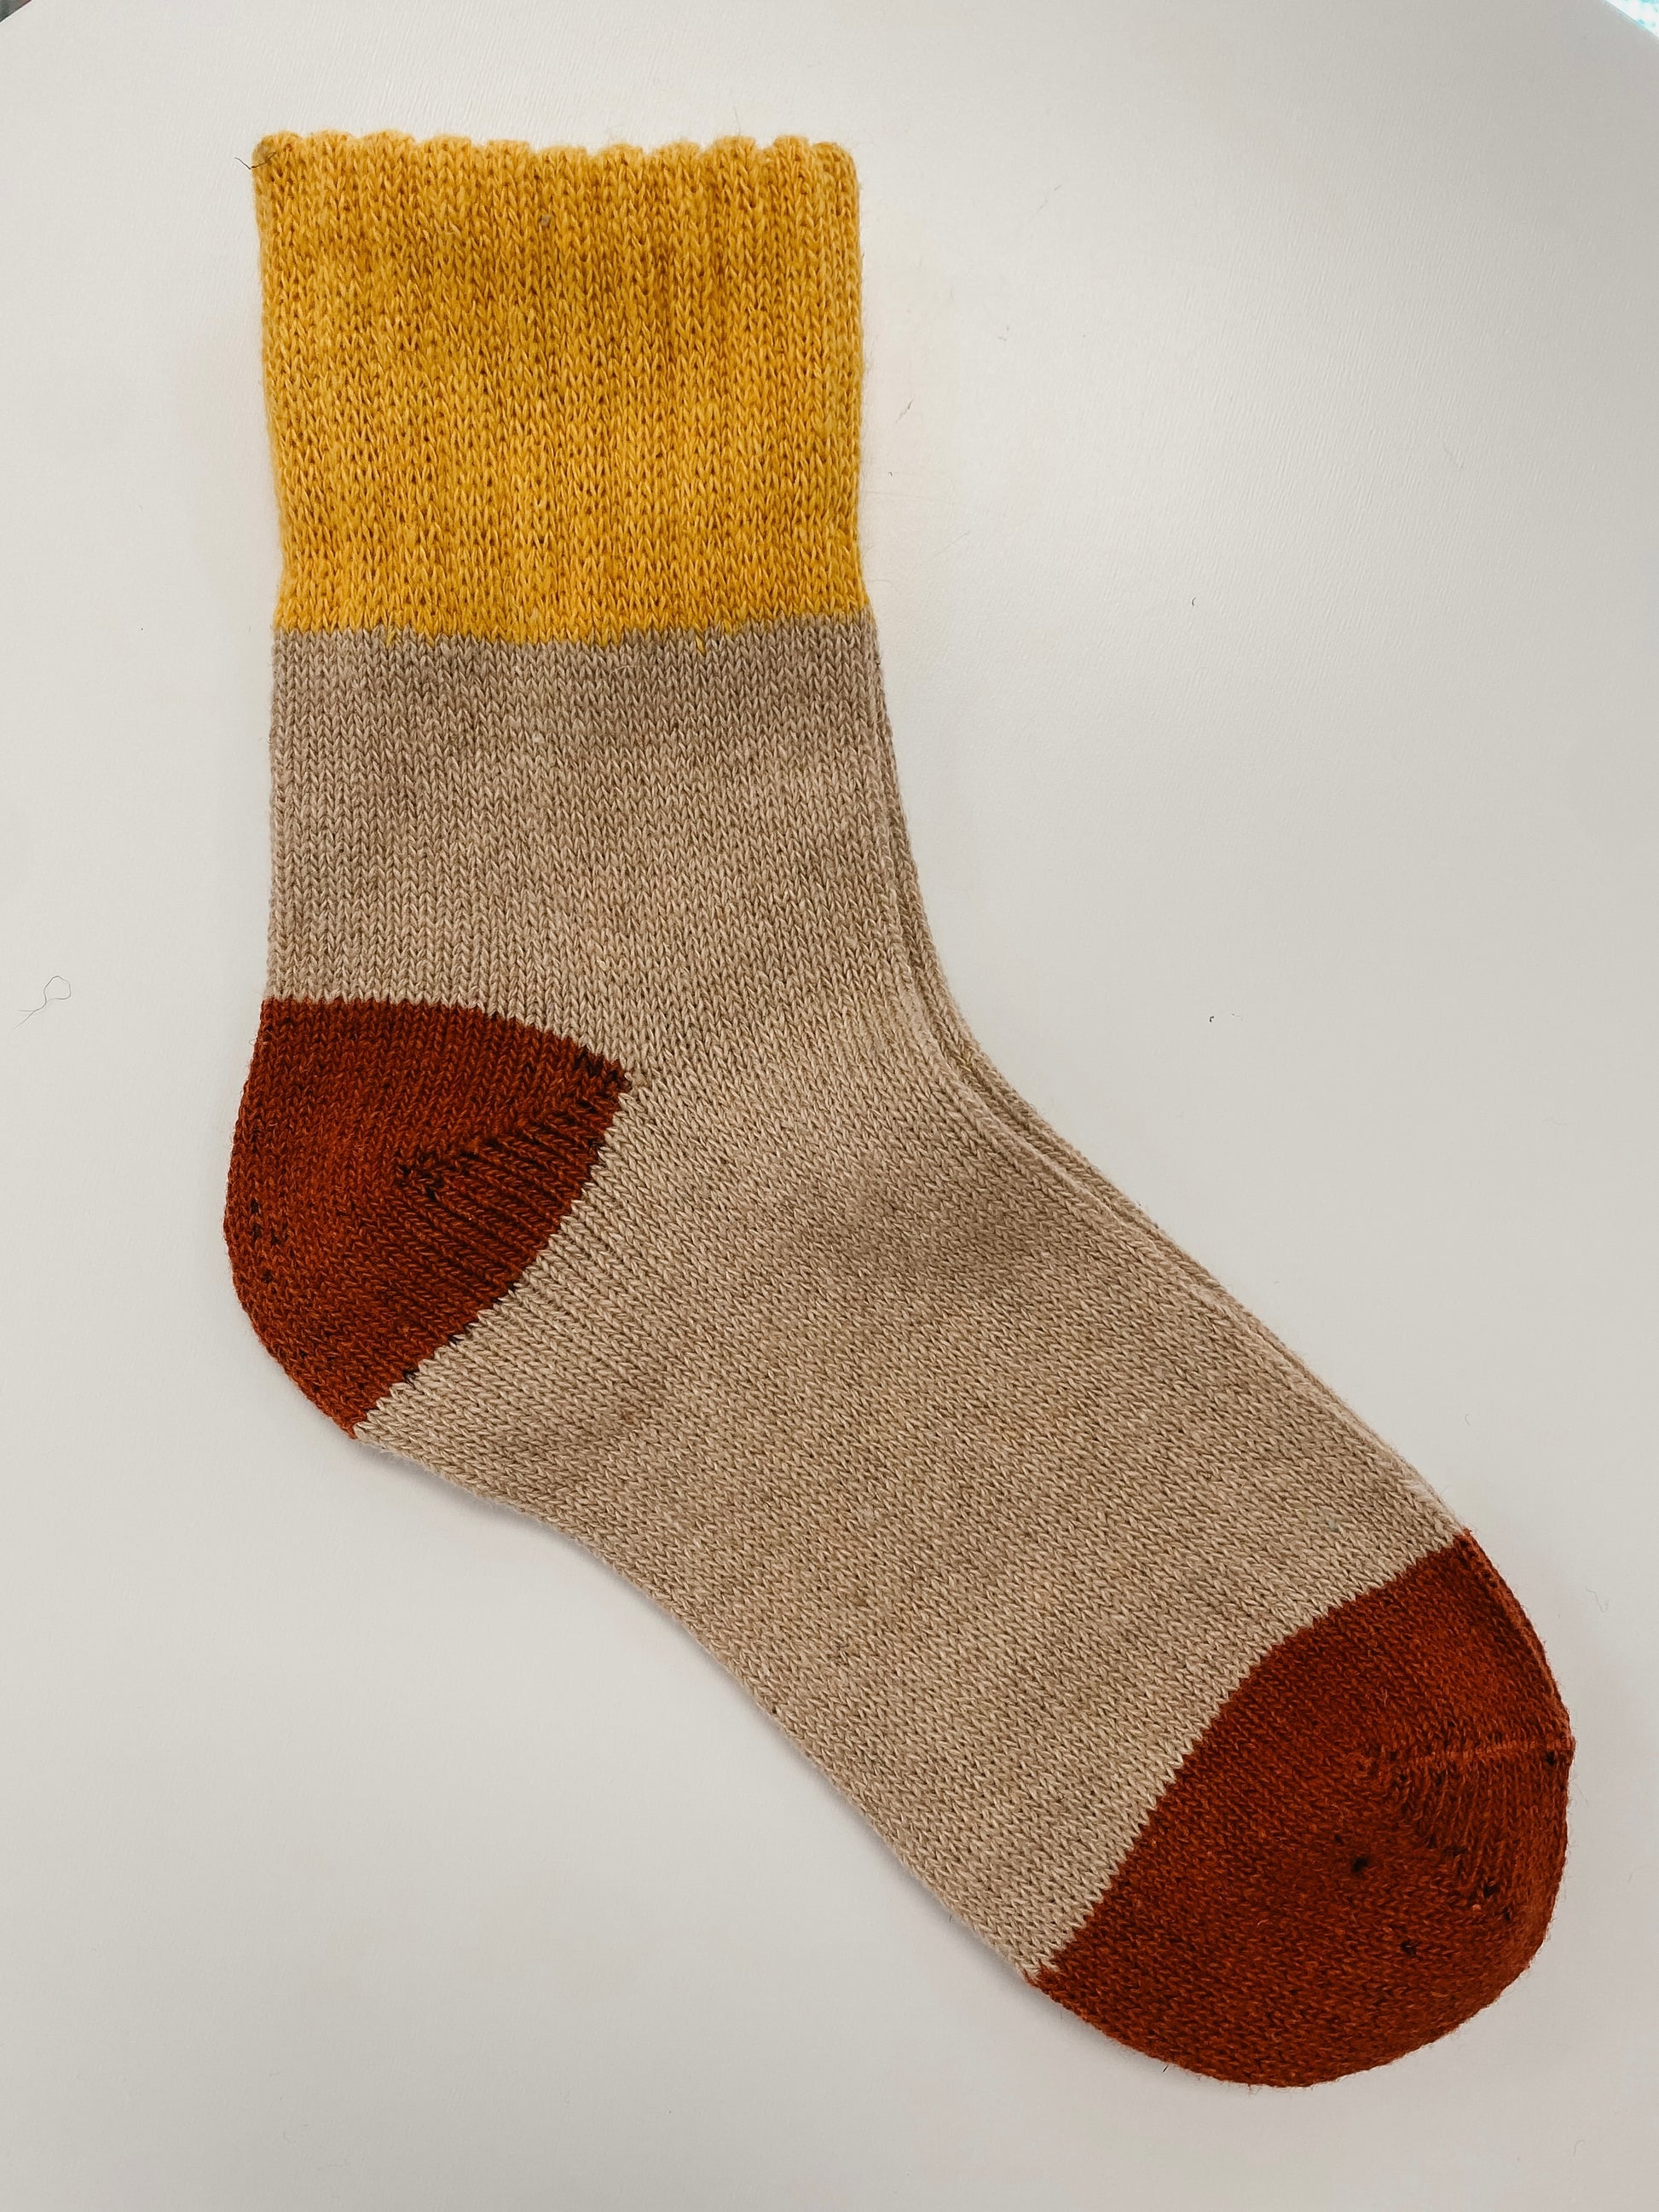 yellow cuff + sand color block socks